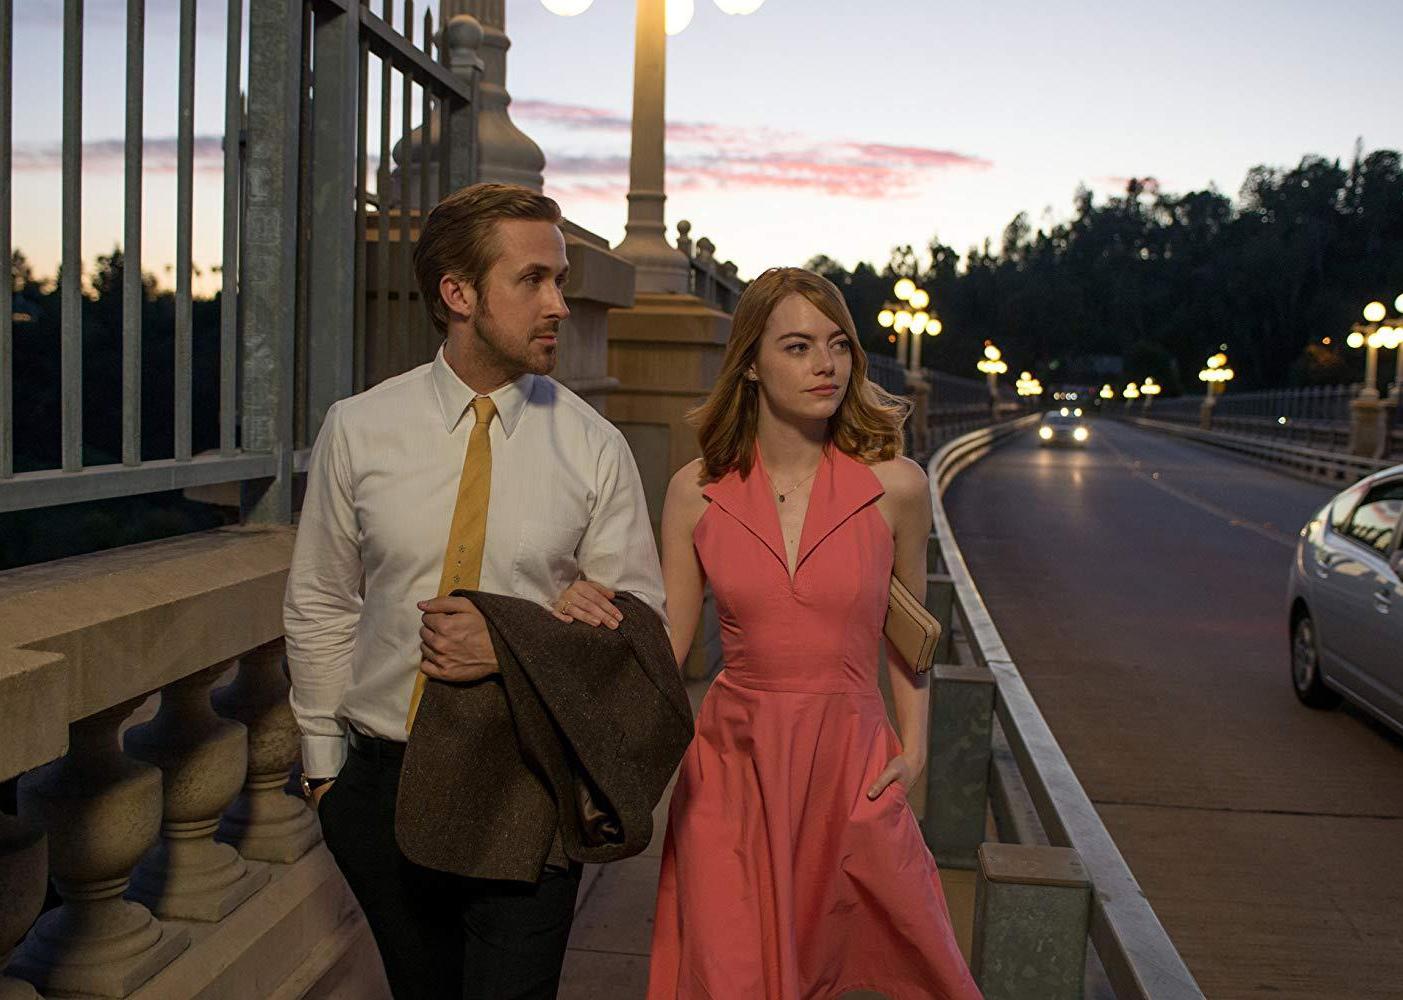 Ryan Gosling and Emma Stone walking down the street.